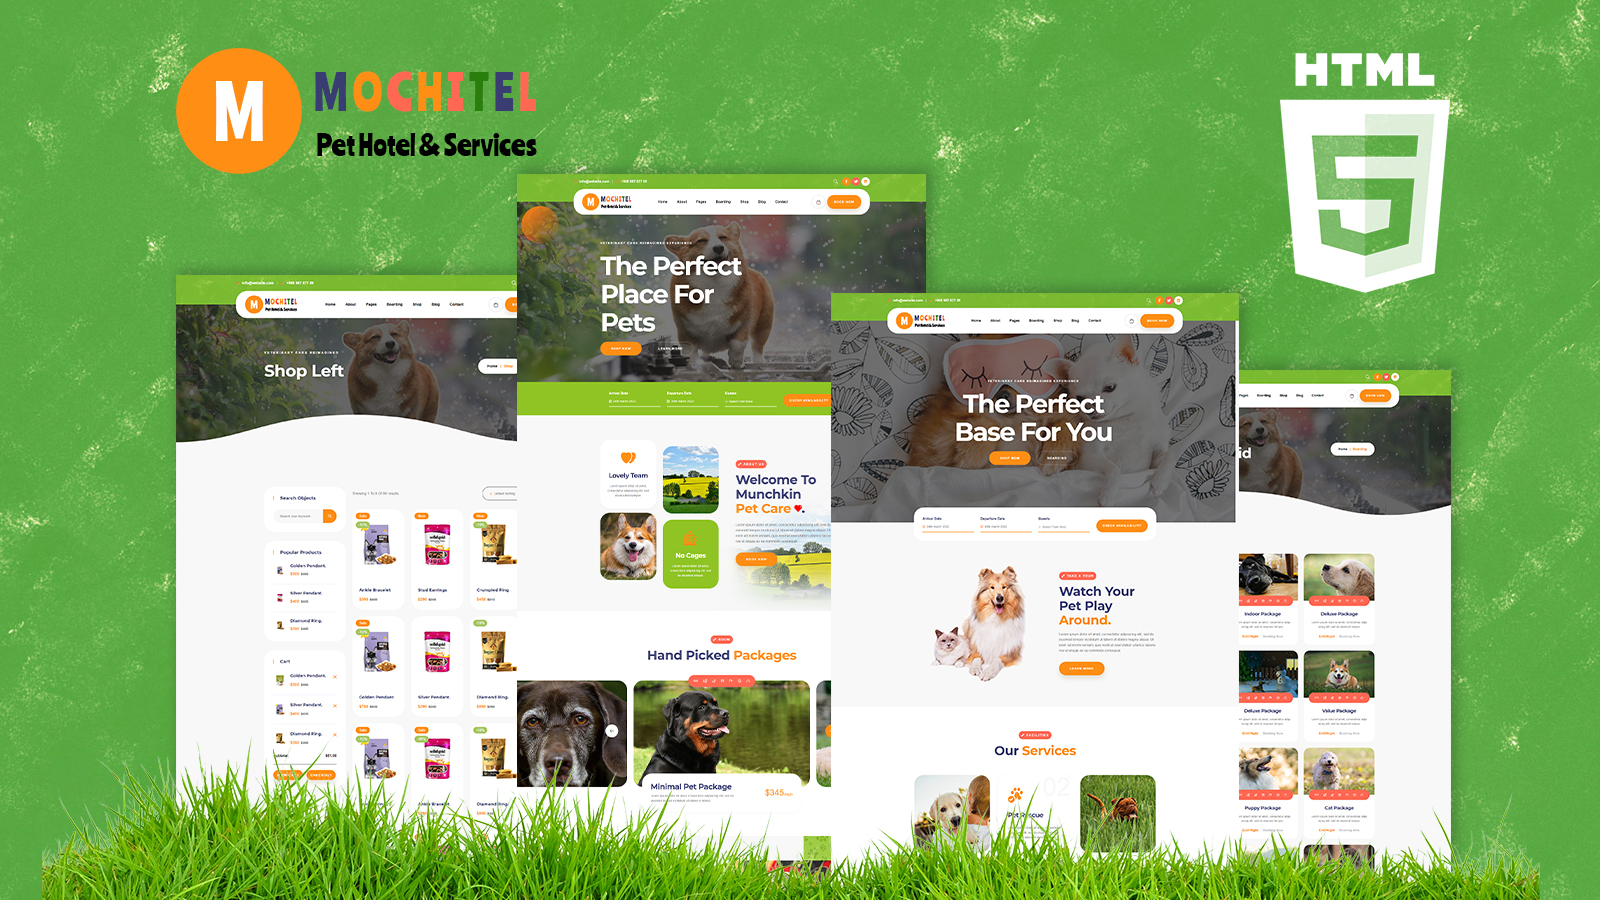 Mothitel Pet Care Shop And Services HTML5 Template